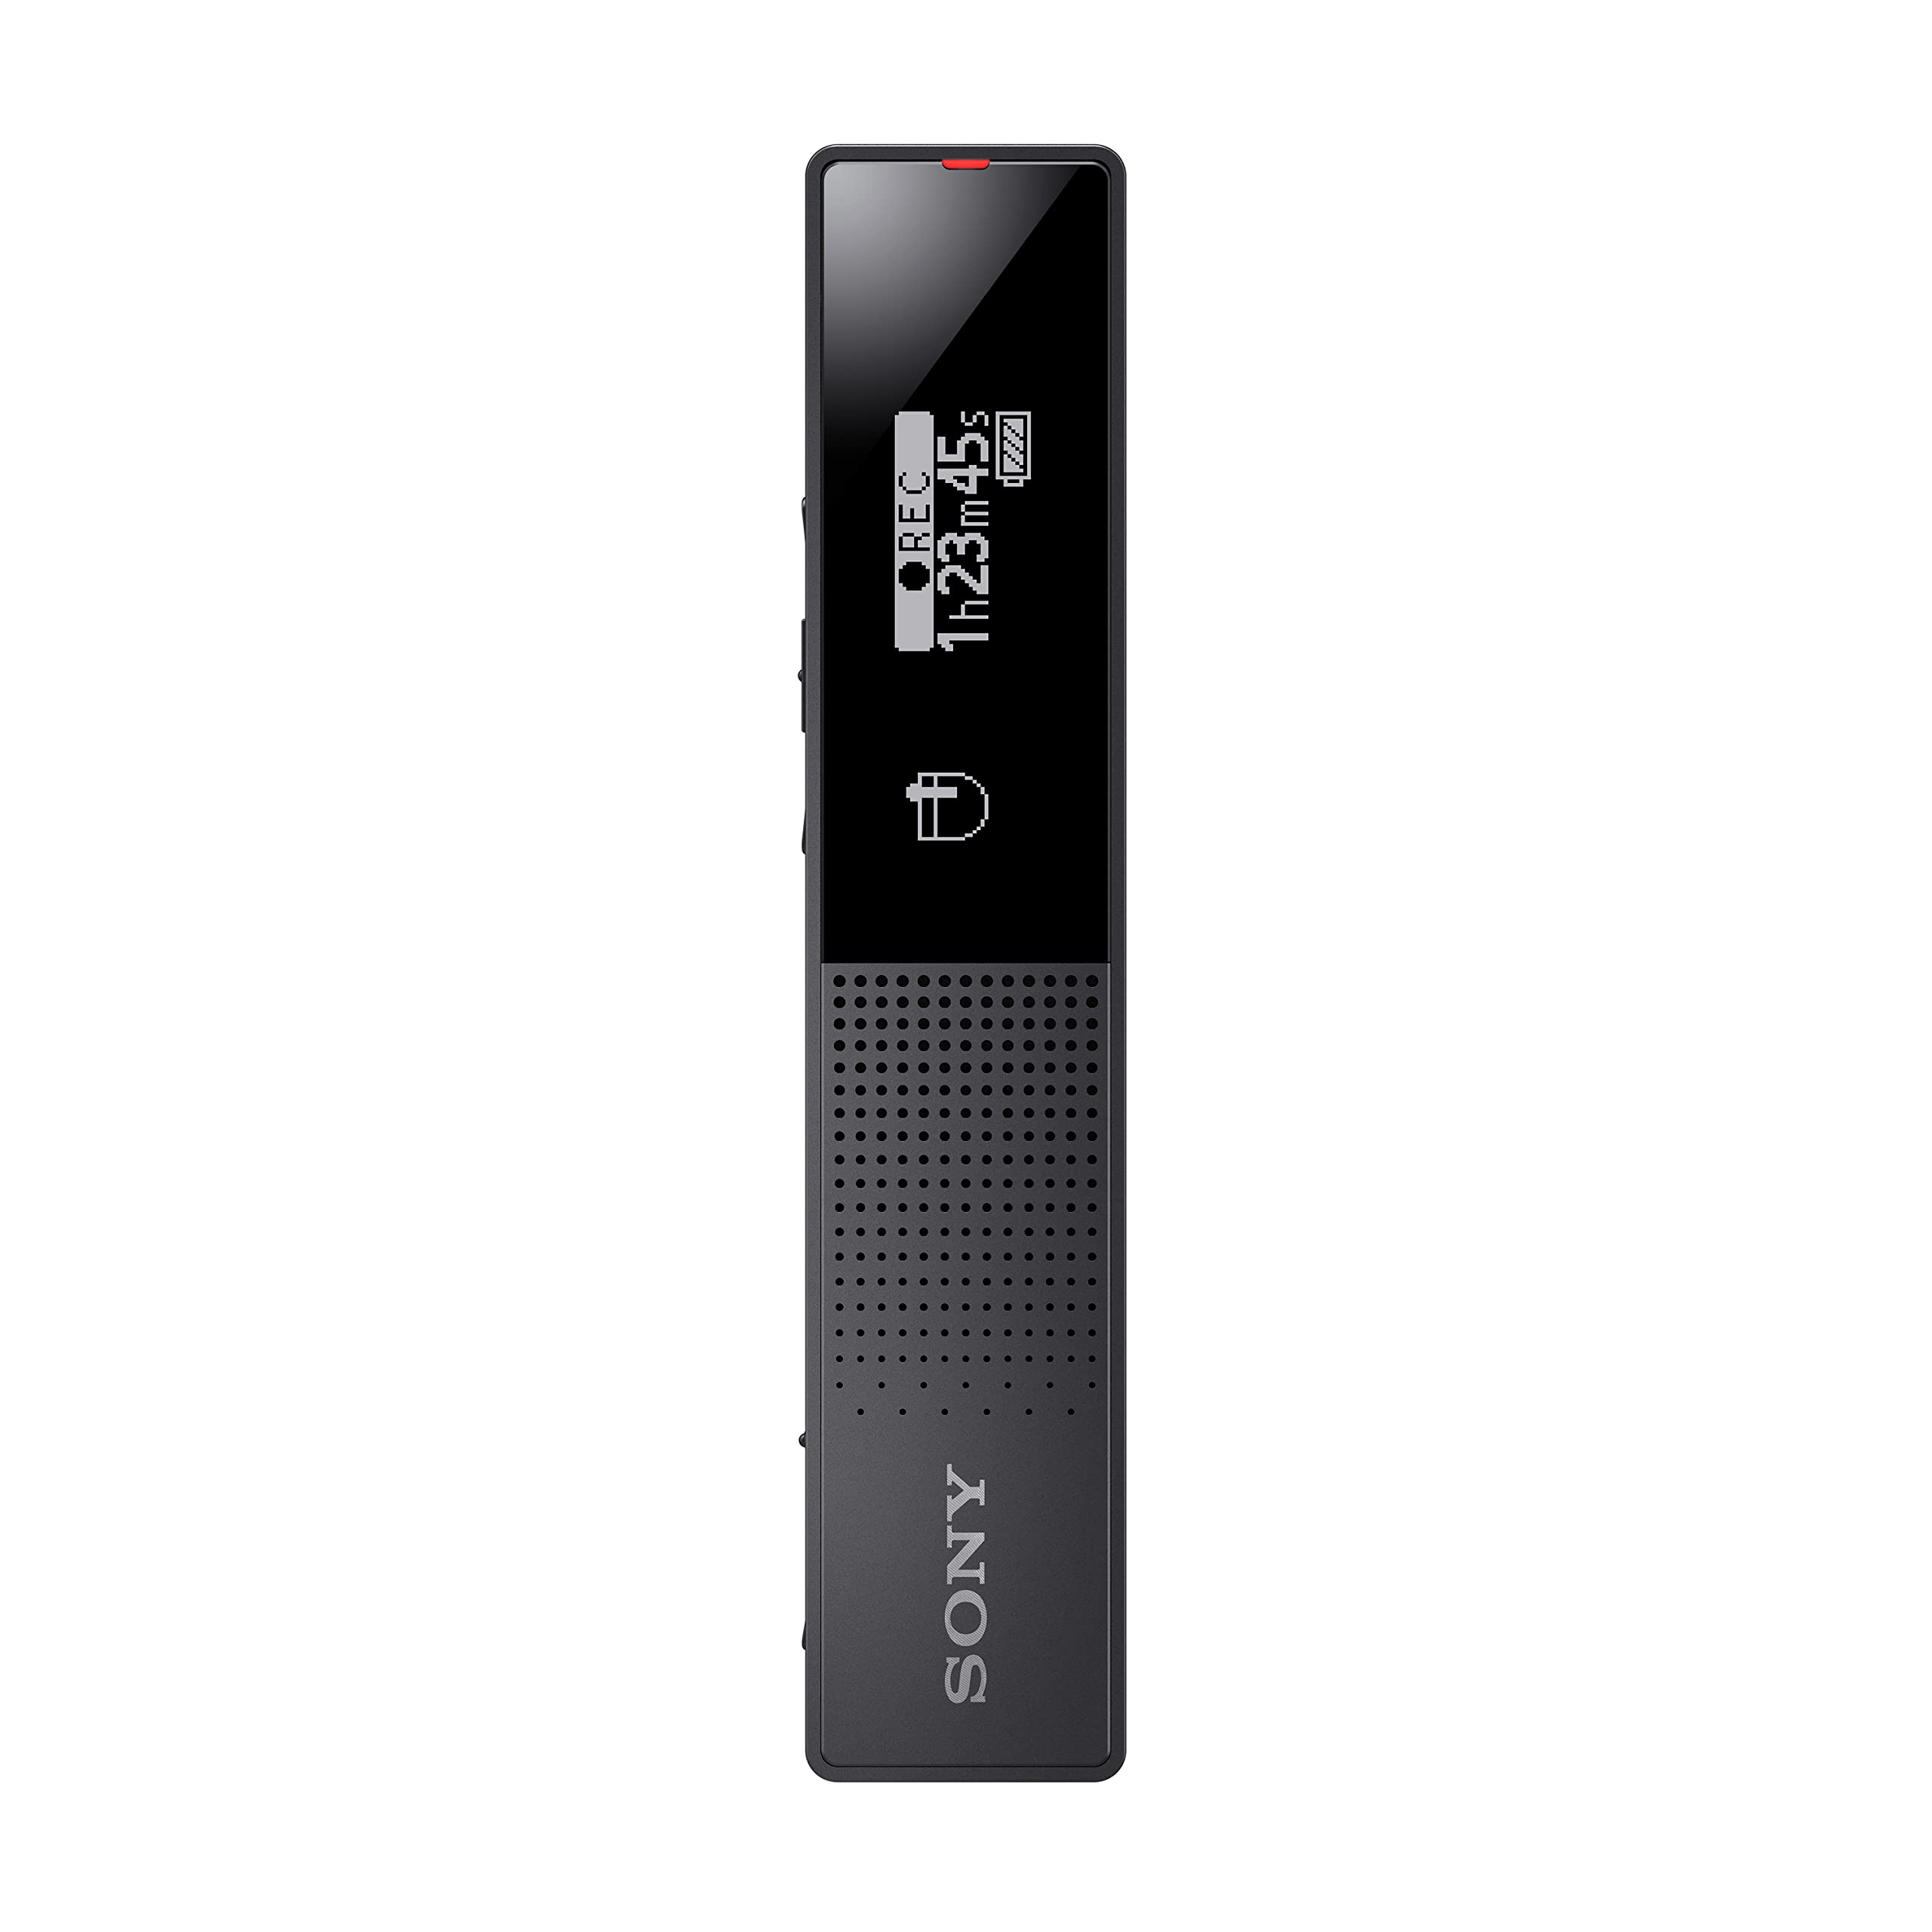 Sony ICD-TX660 — тонкий цифровой диктофон с OLED-дисплеем